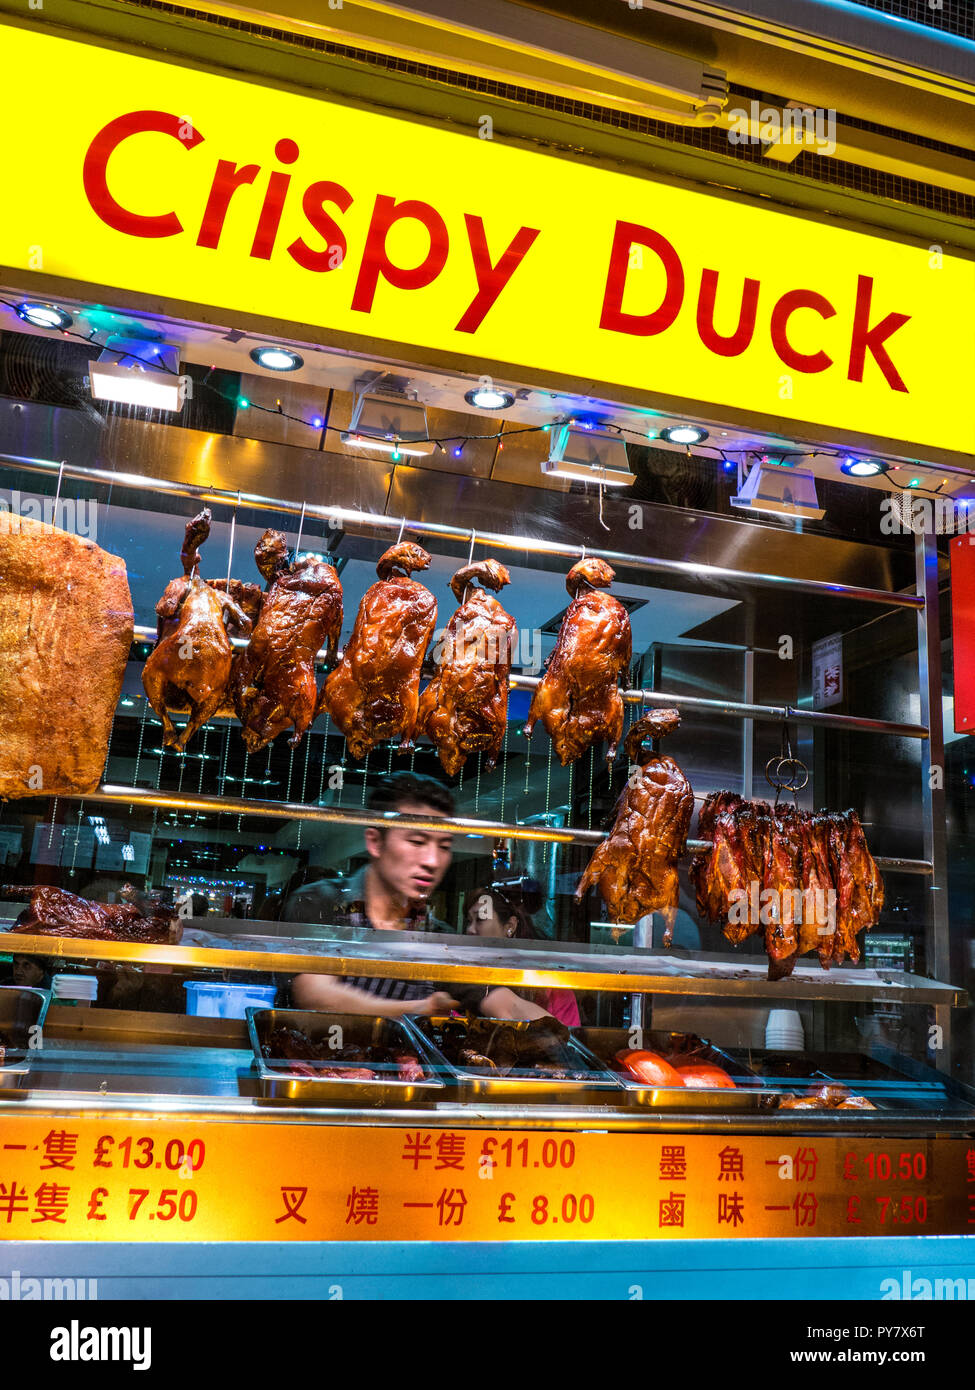 CRISPY DUCK WINDOW DISPLAY CHINATOWN Chef arranging duck & pork hanging air drying in Chinese restaurant Gerrard Street Chinatown Soho London UK Stock Photo